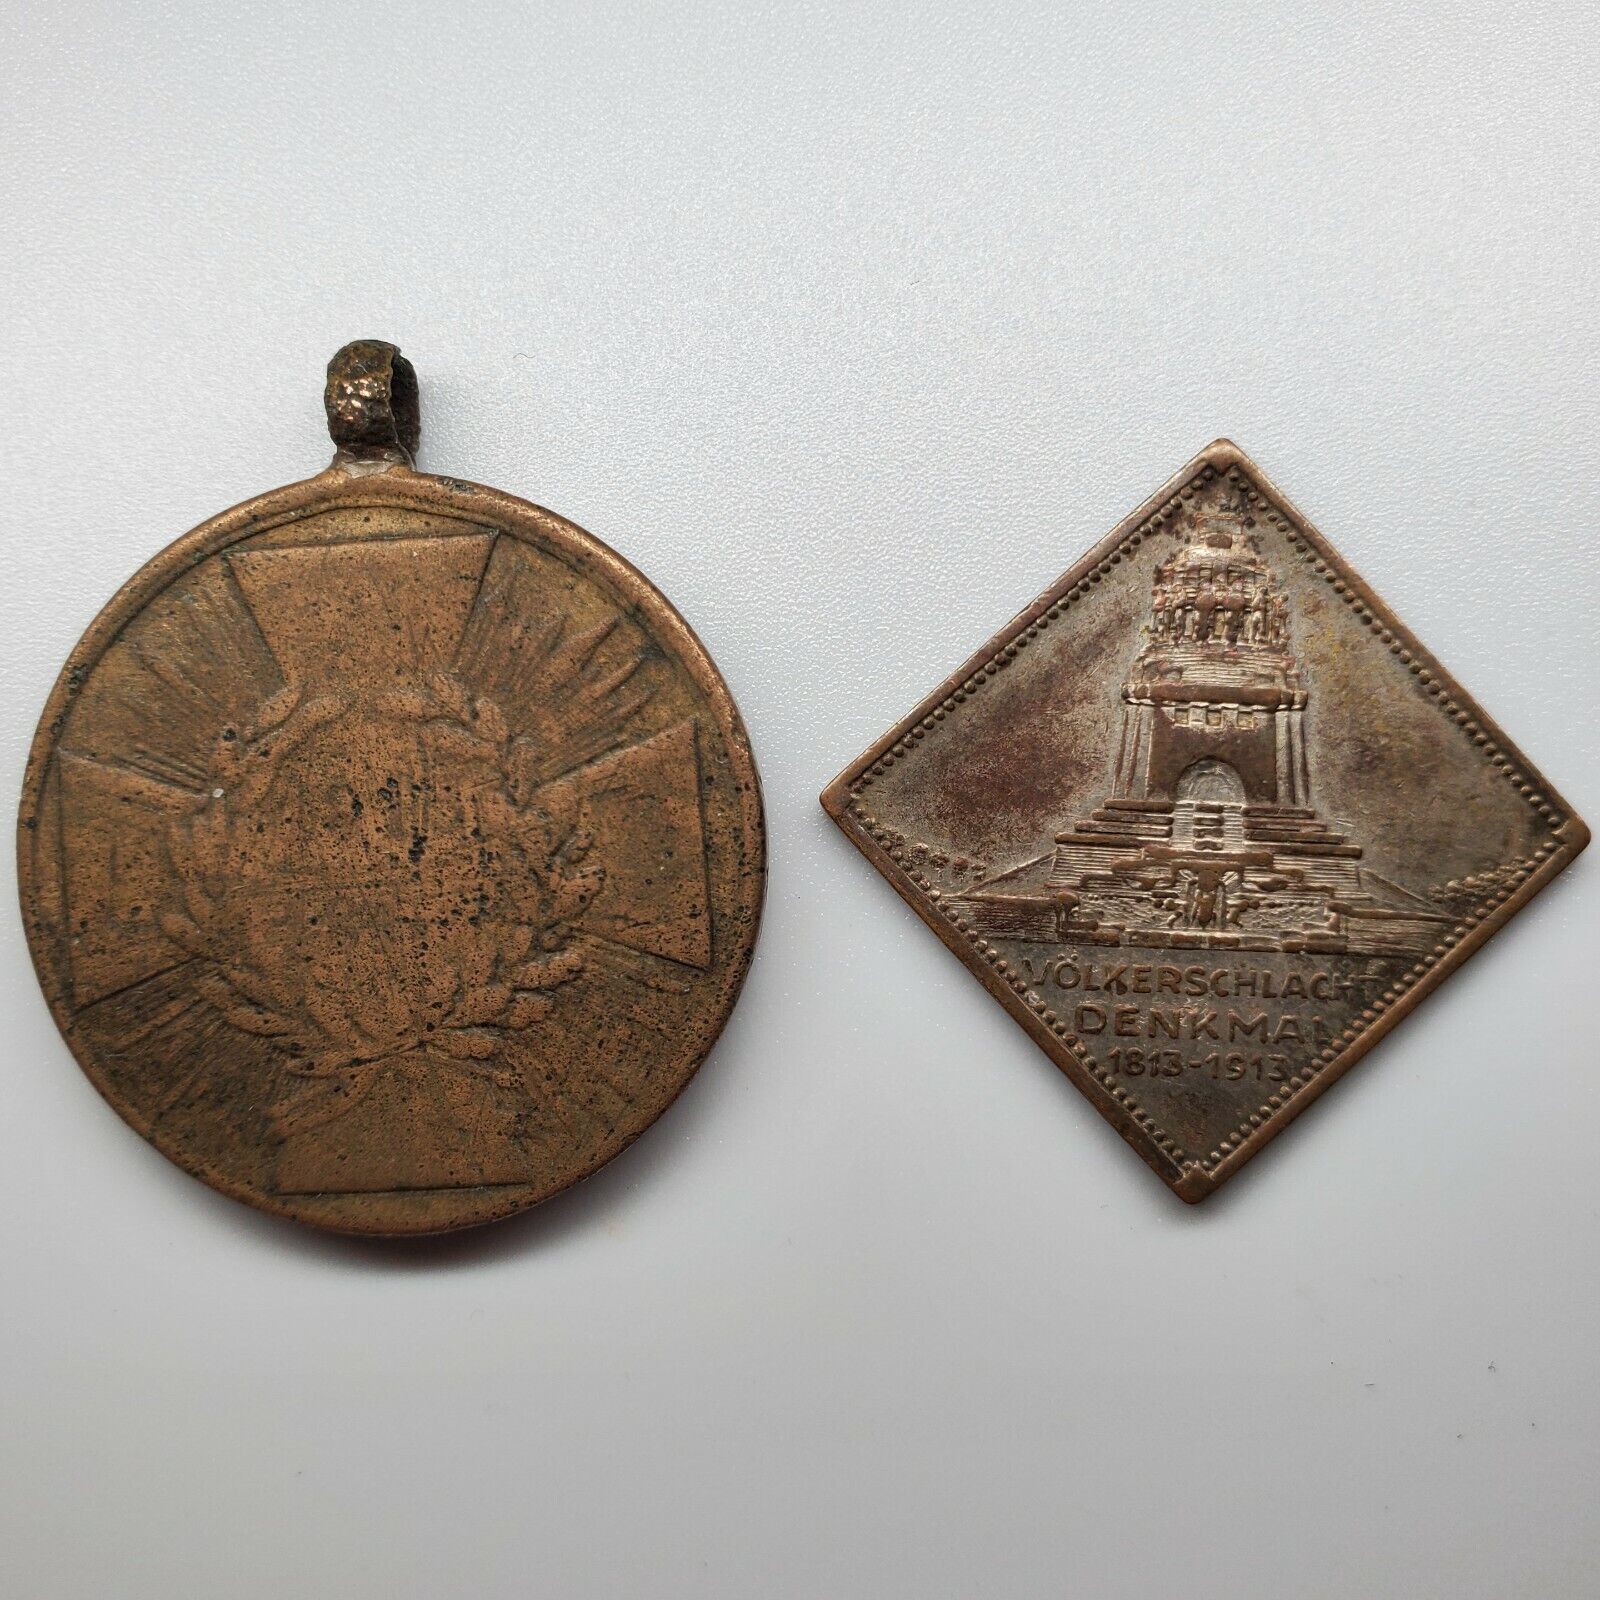 Napoleon German bronze medal War 1813 1814 1913 cannon award coin Leipzig army